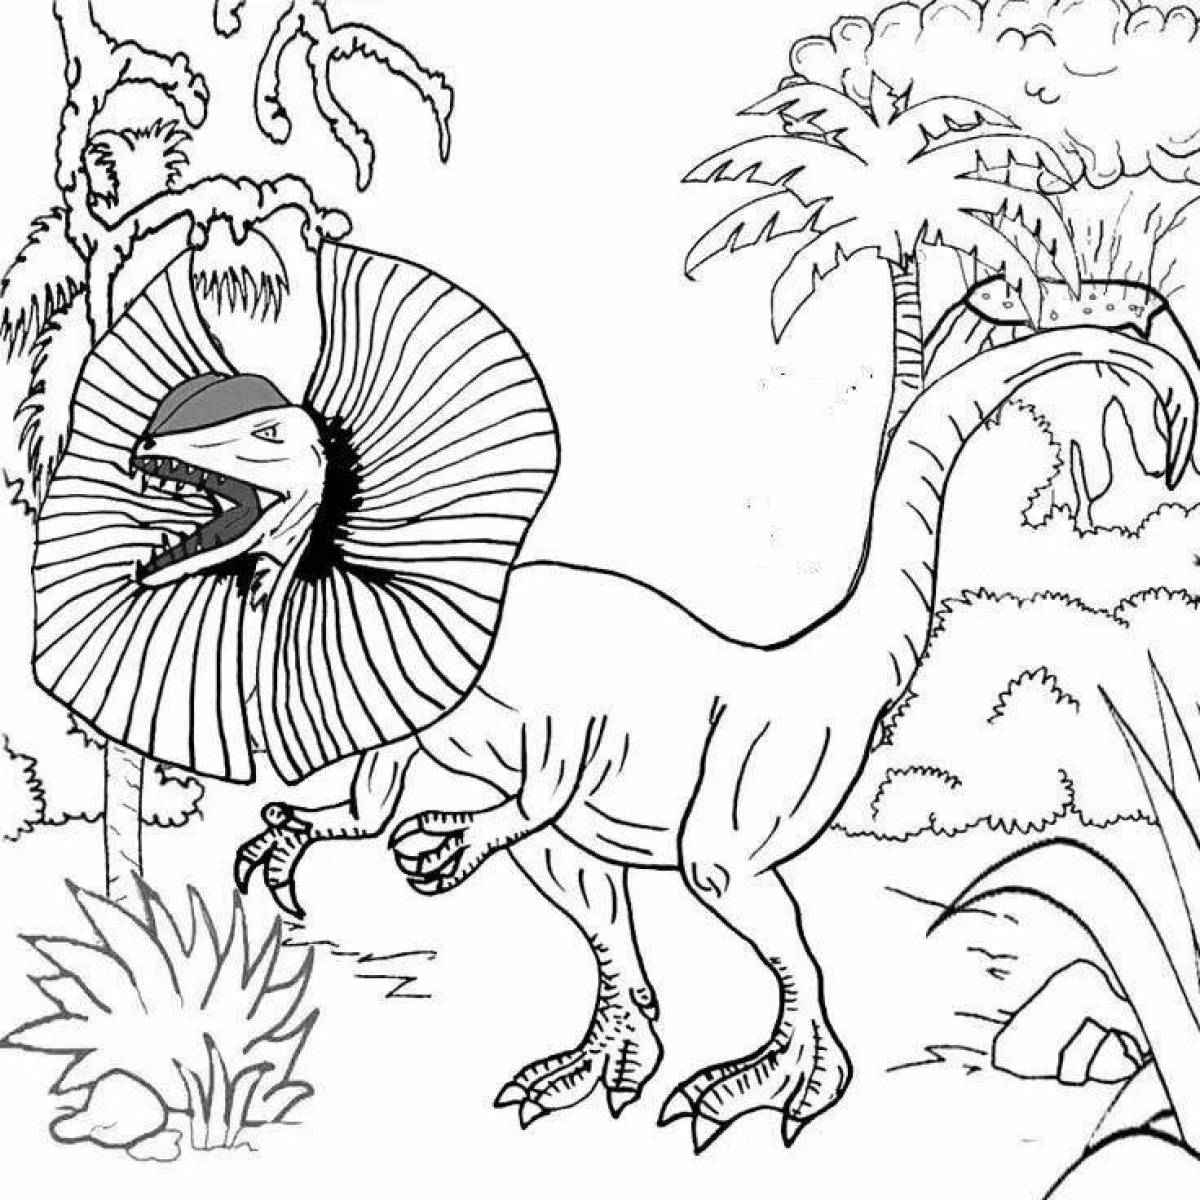 Mysterious dilophosaurus coloring book